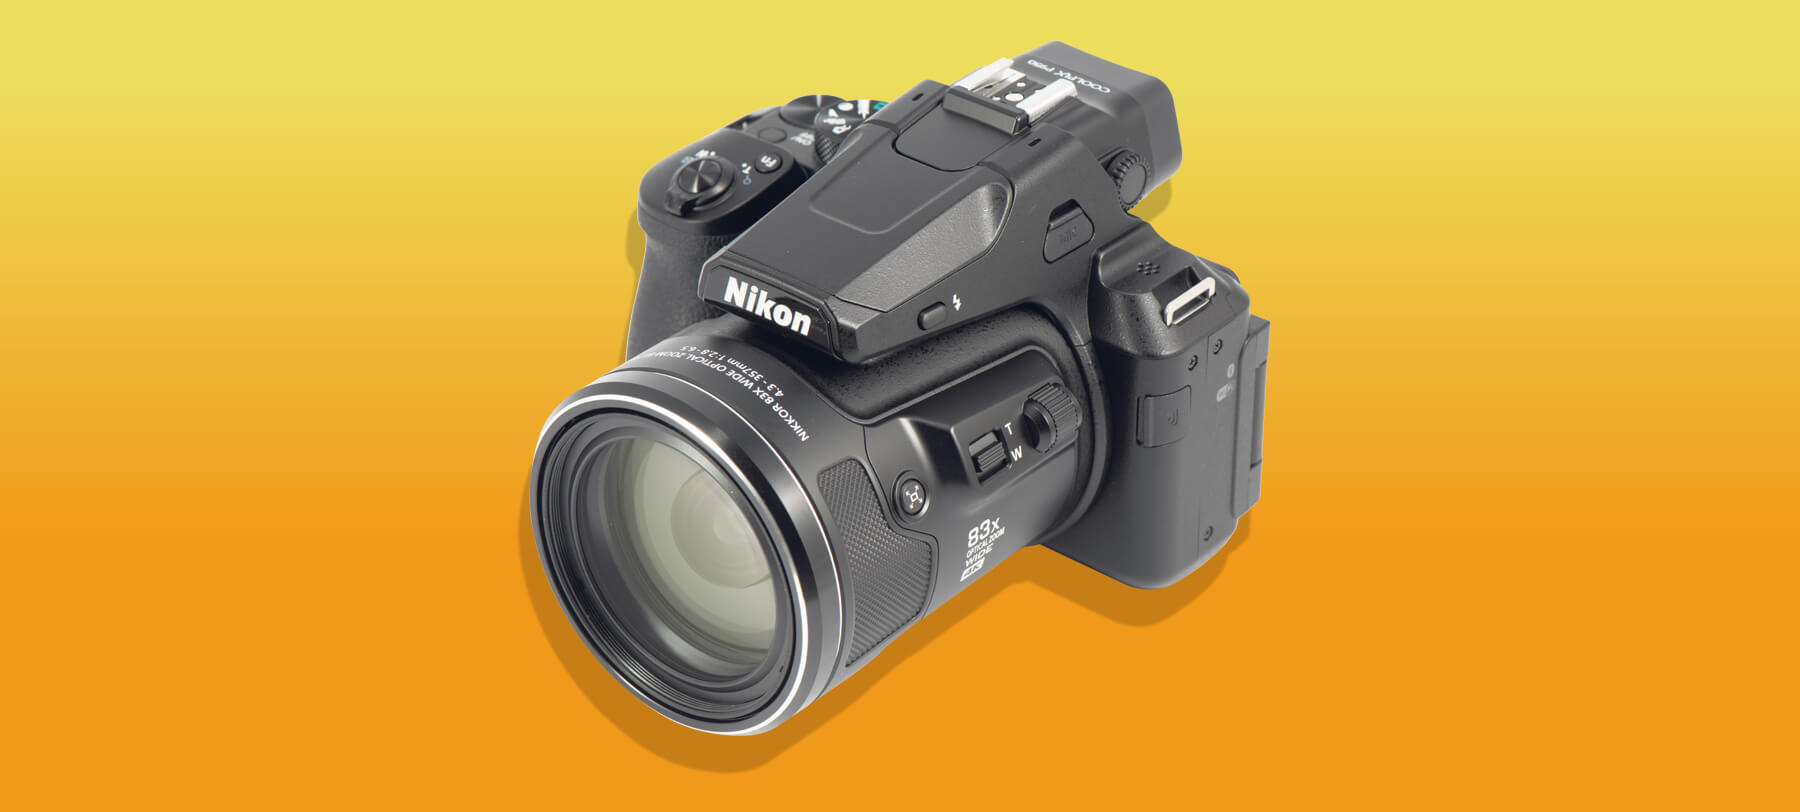 Nikon Coolpix P950 test: bridge the gap - Photography News